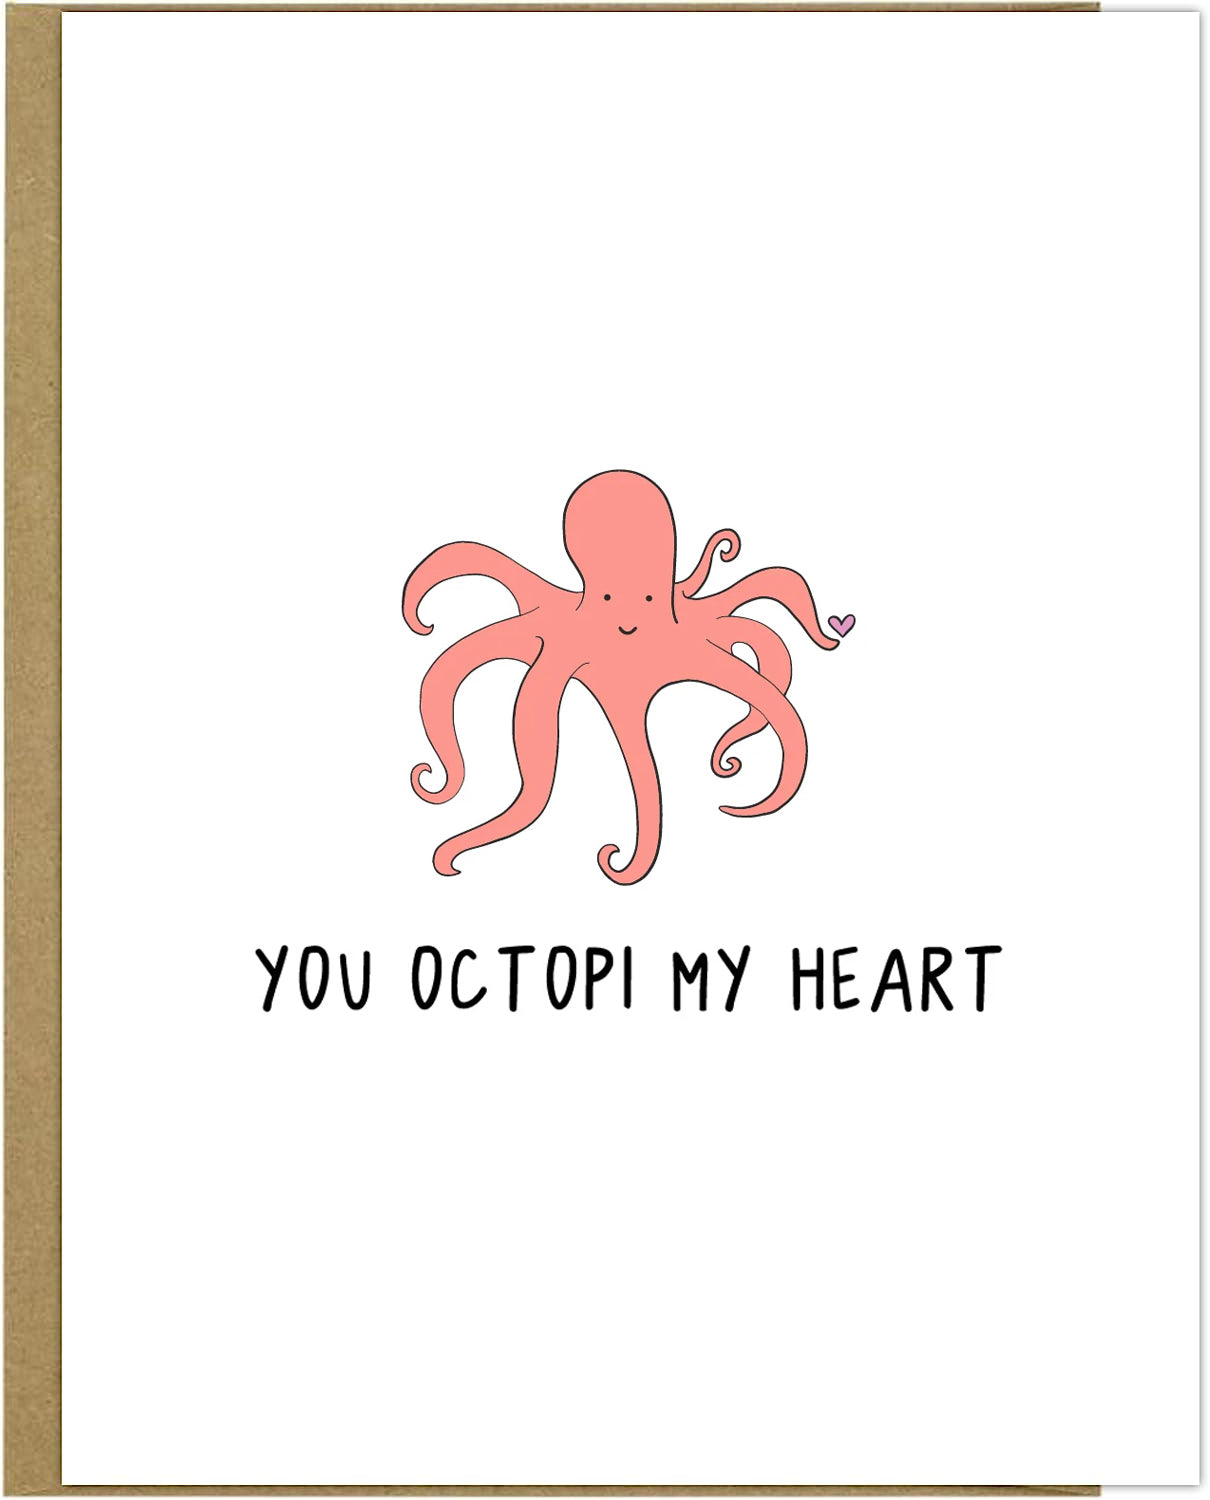 The rockdoodles Octopi Card.